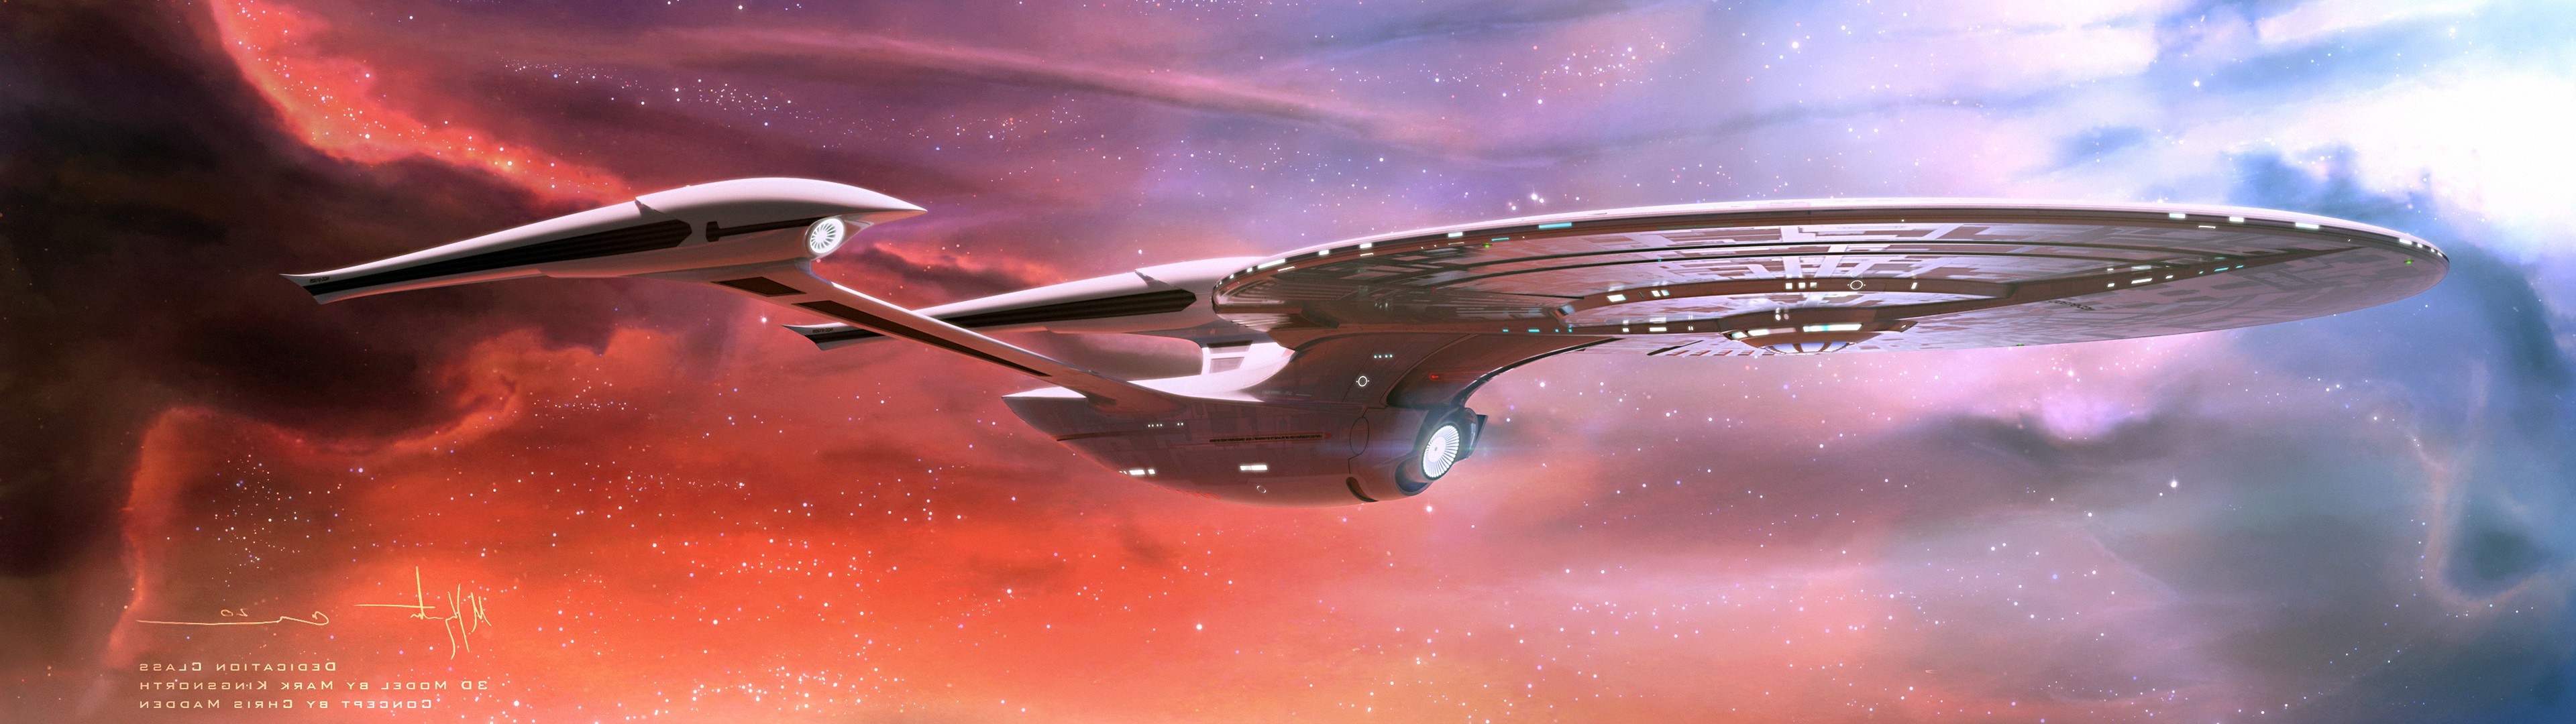 Star Trek, USS Enterprise (spaceship), Space, Nebula, Multiple Display Wallpaper